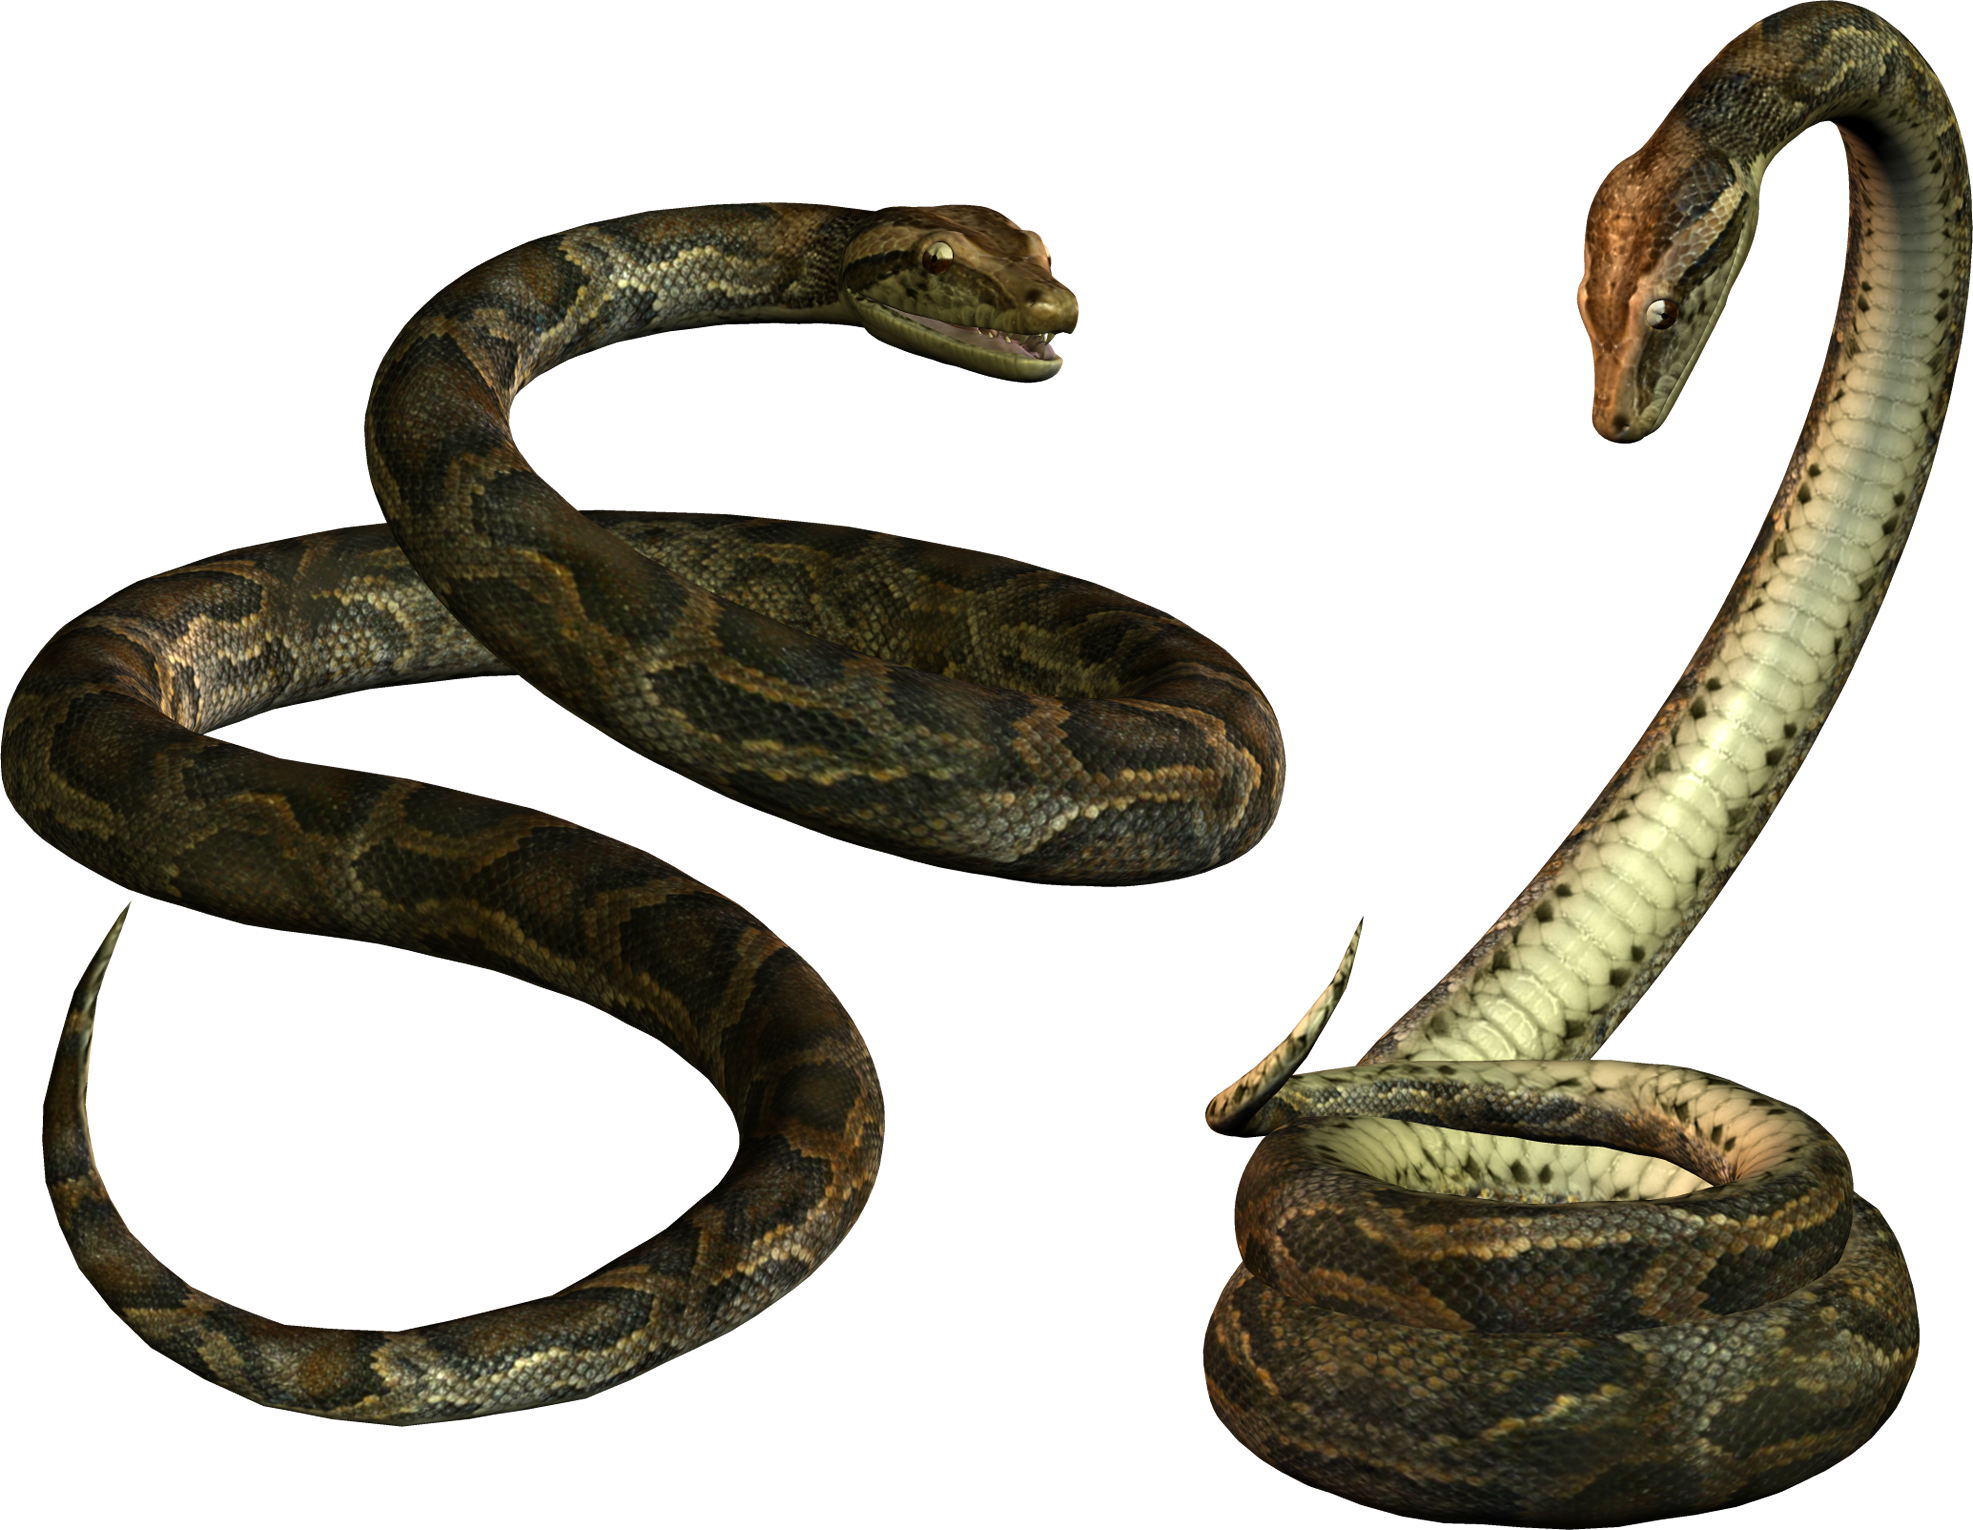 Titanoboa Змея PNG Image